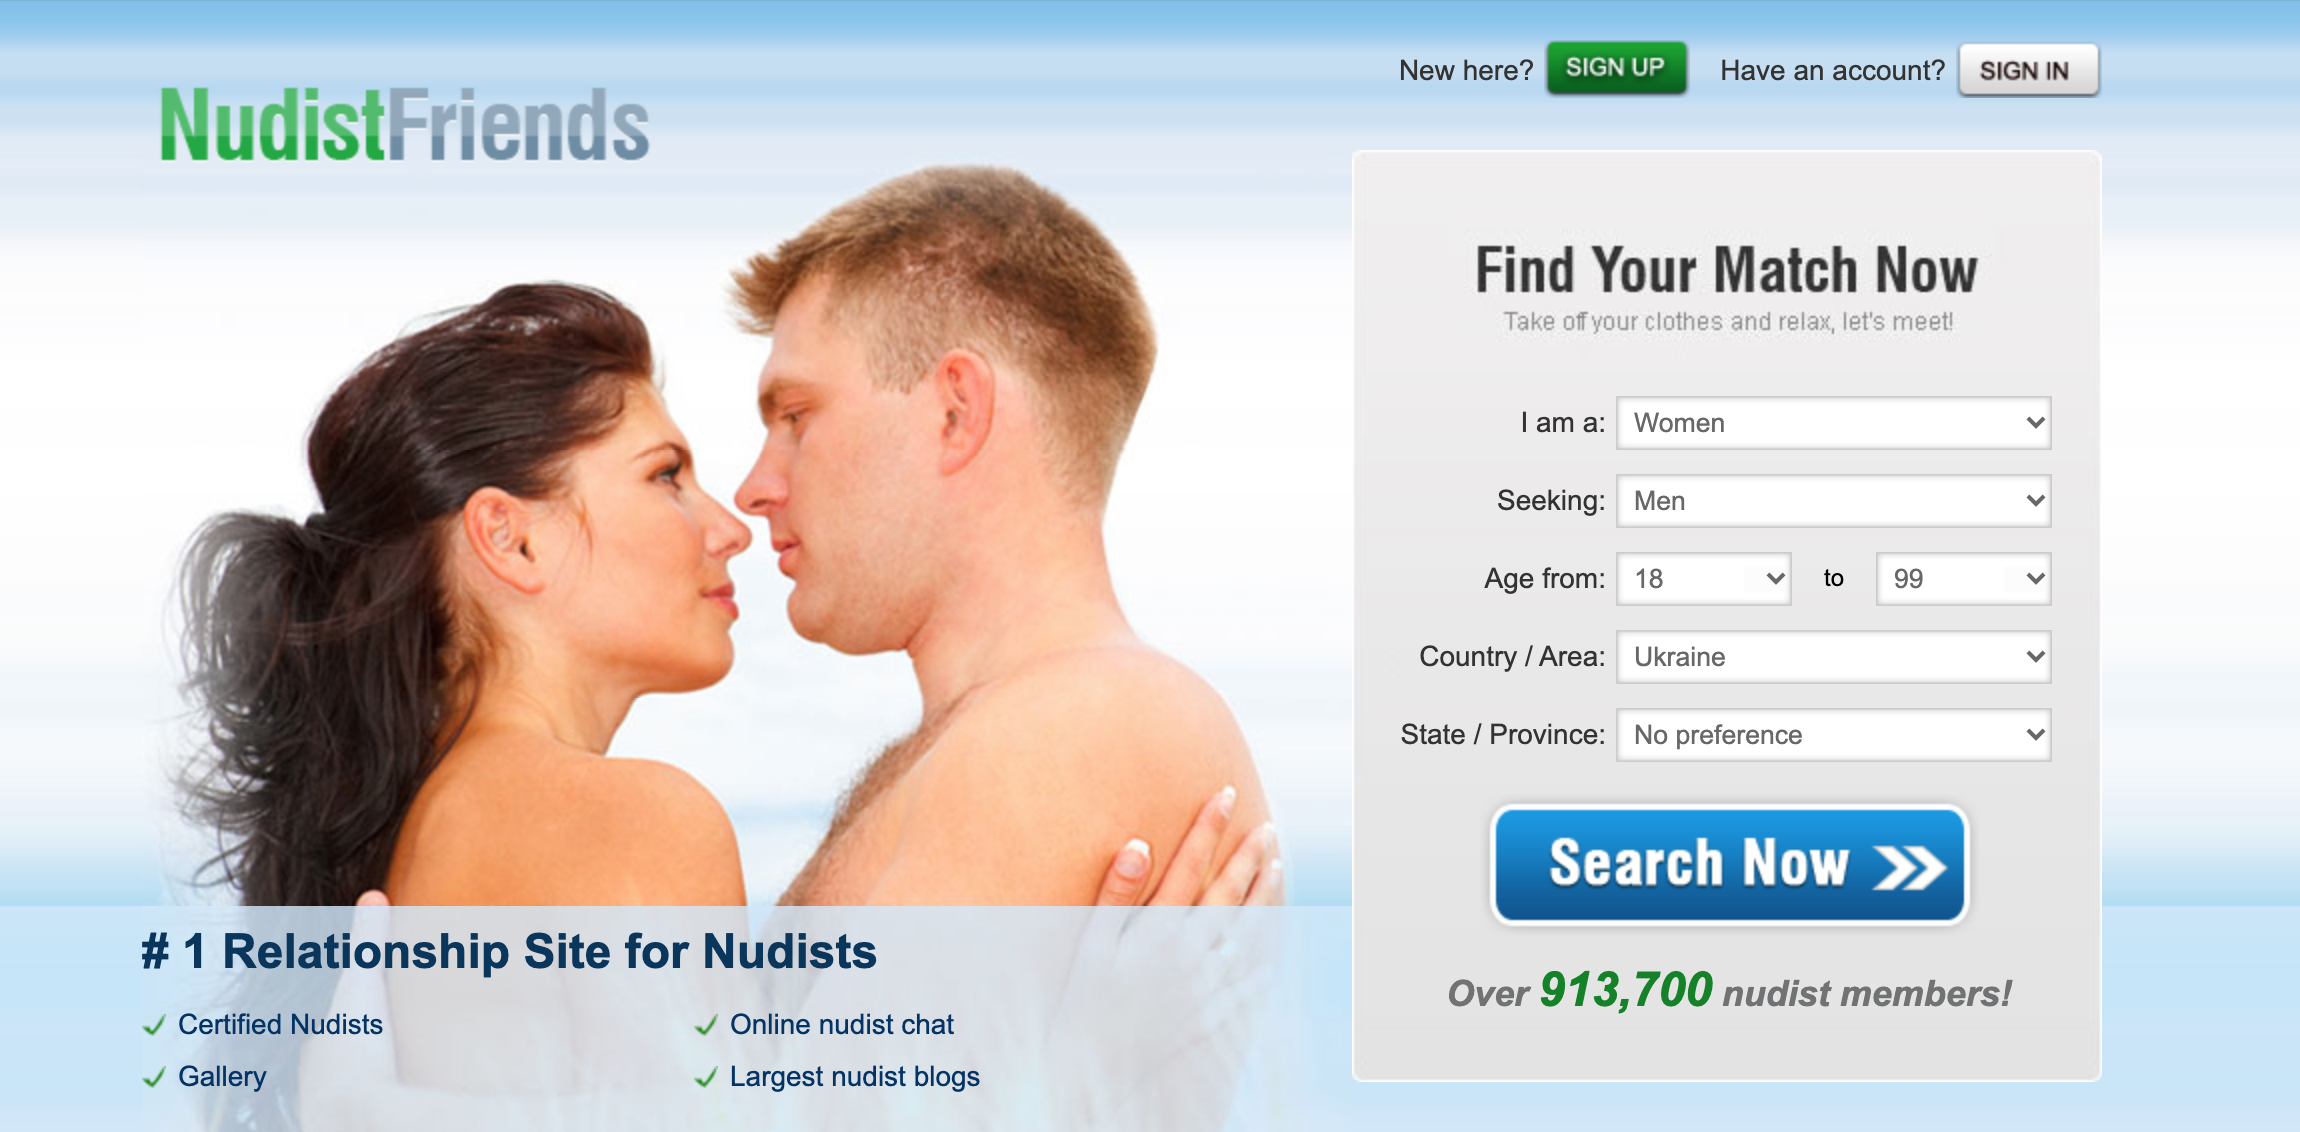 Nudist friends.com